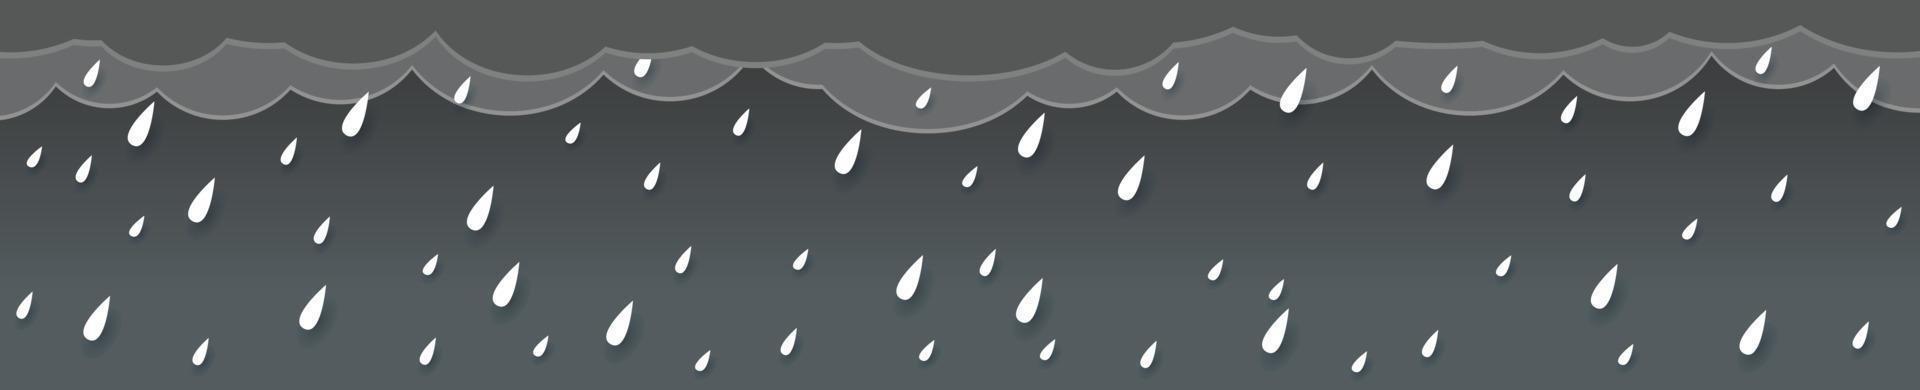 regn och moln, storm bakgrund, horisontell banner, vektorillustration. vektor